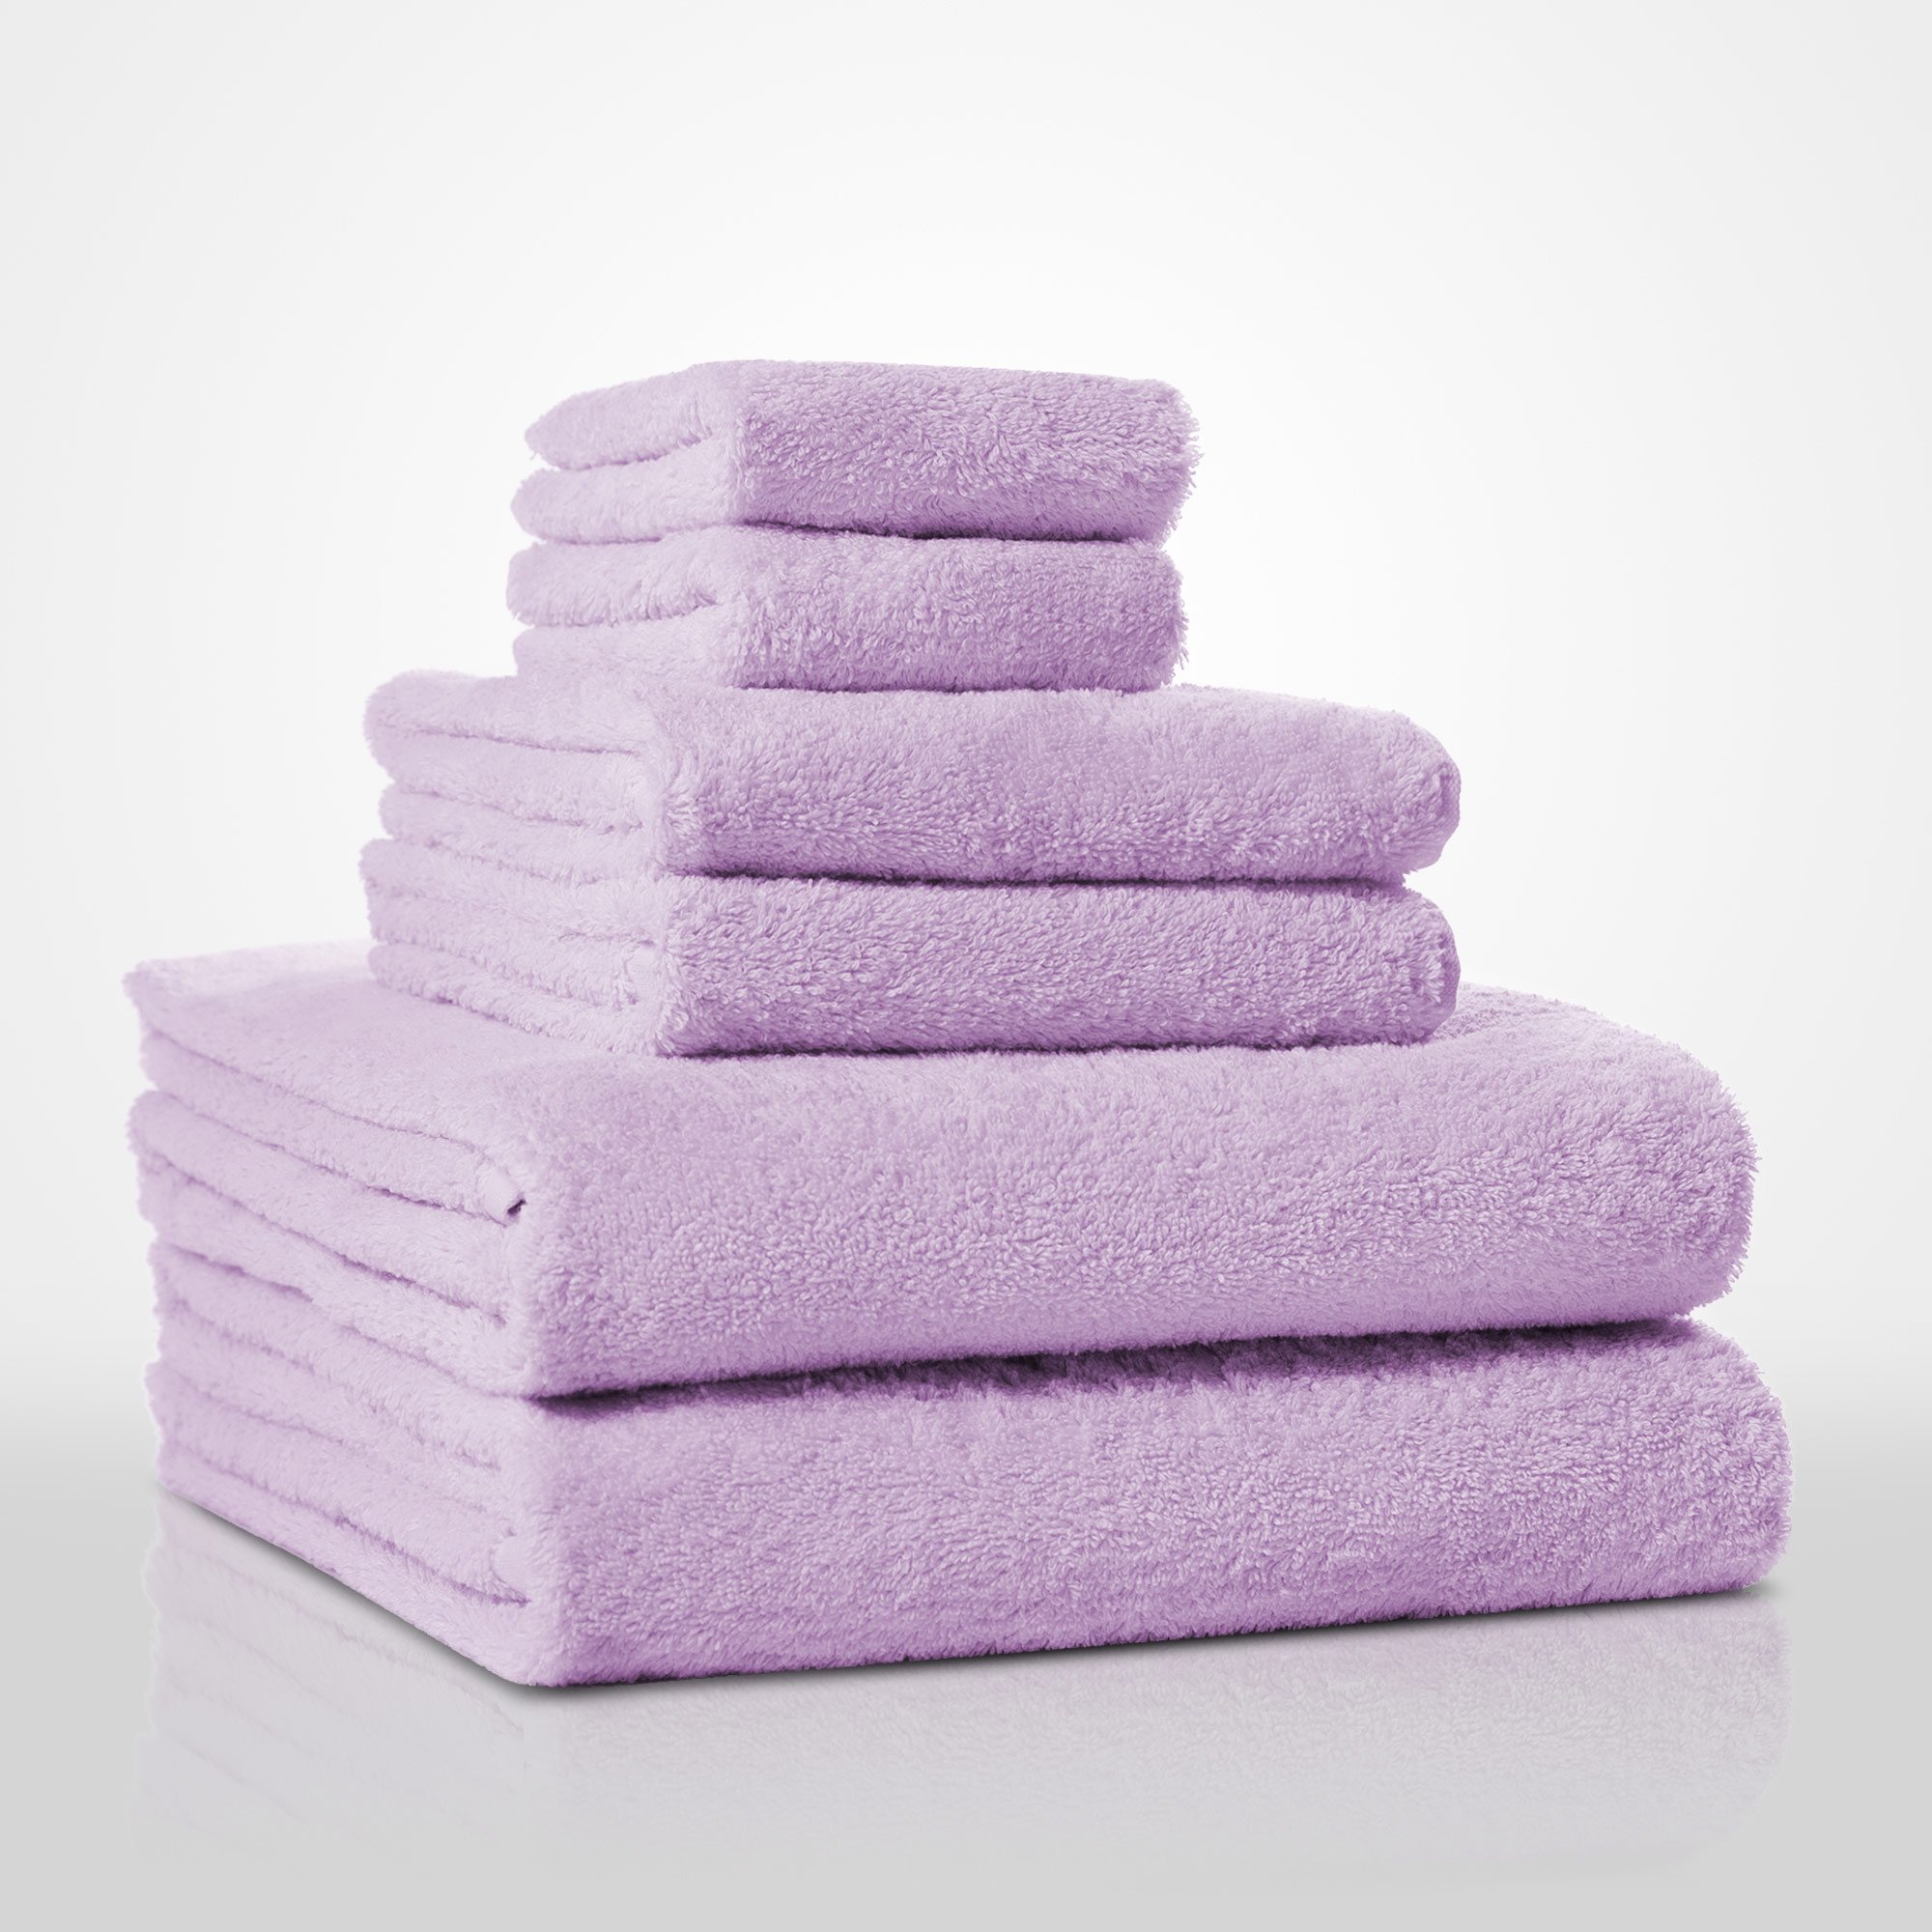 16" x 29" - 100% Turkish Cotton Lavender Terry Hand Towel-Robemart.com